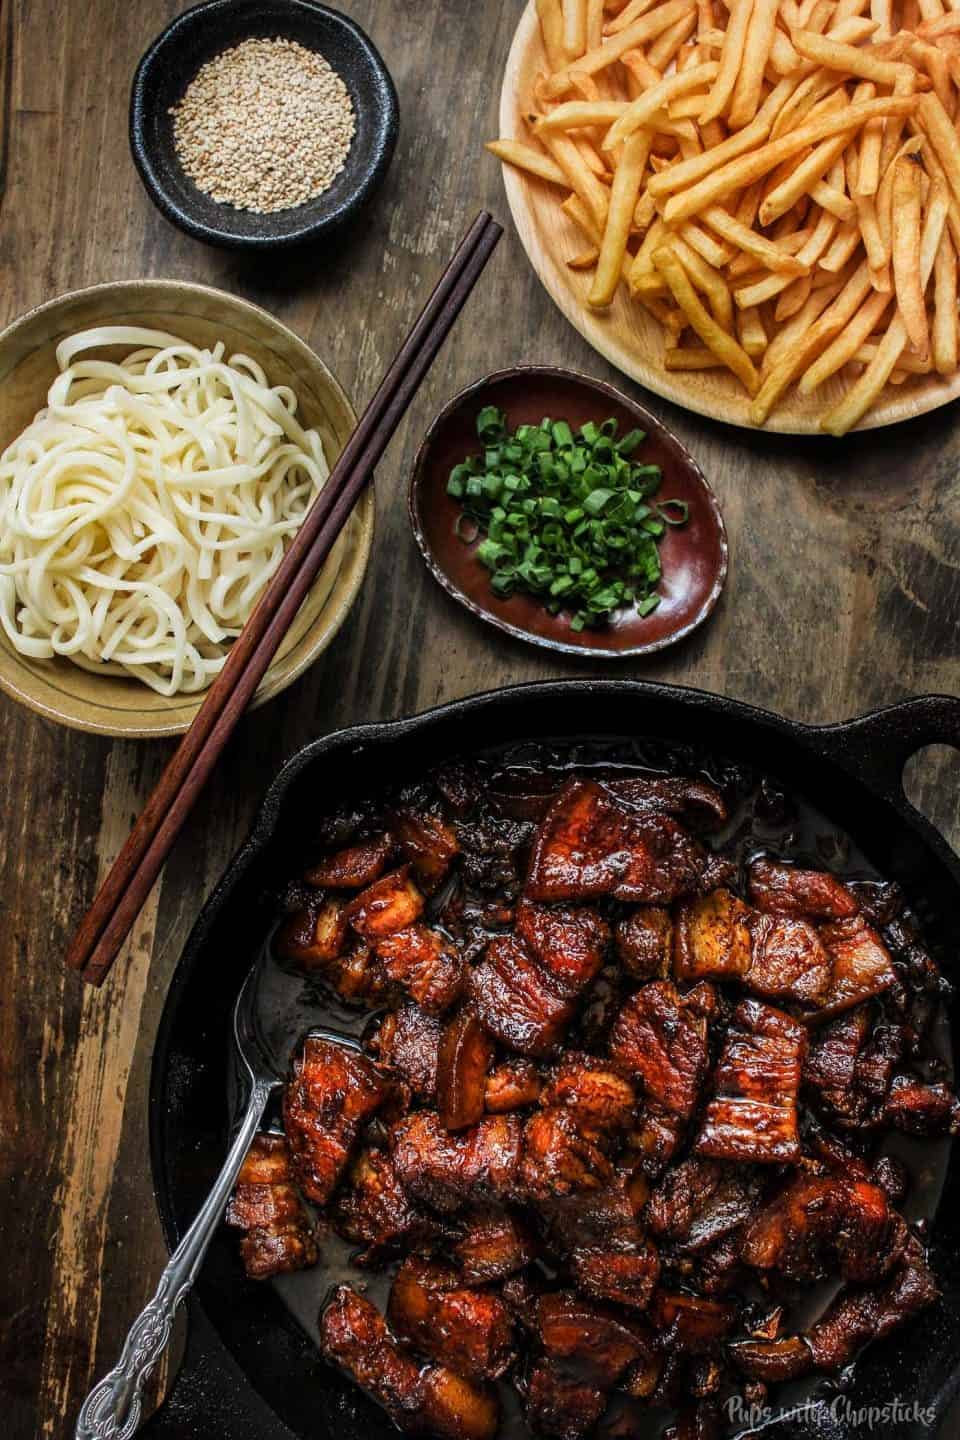 A pork belly skillet with noodles and chopsticks.